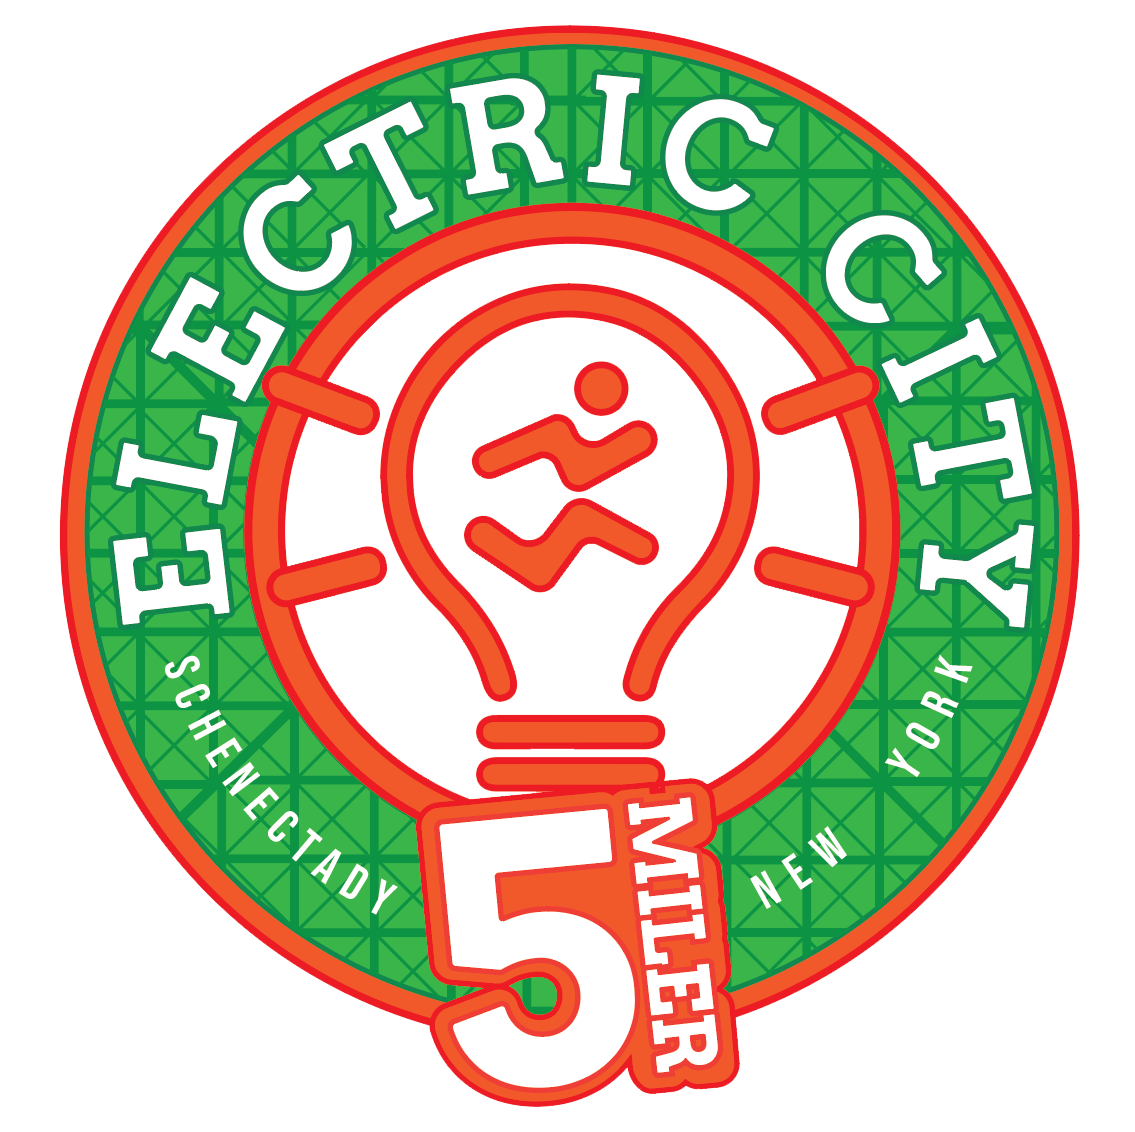 Electric City 5 Miler logo on RaceRaves